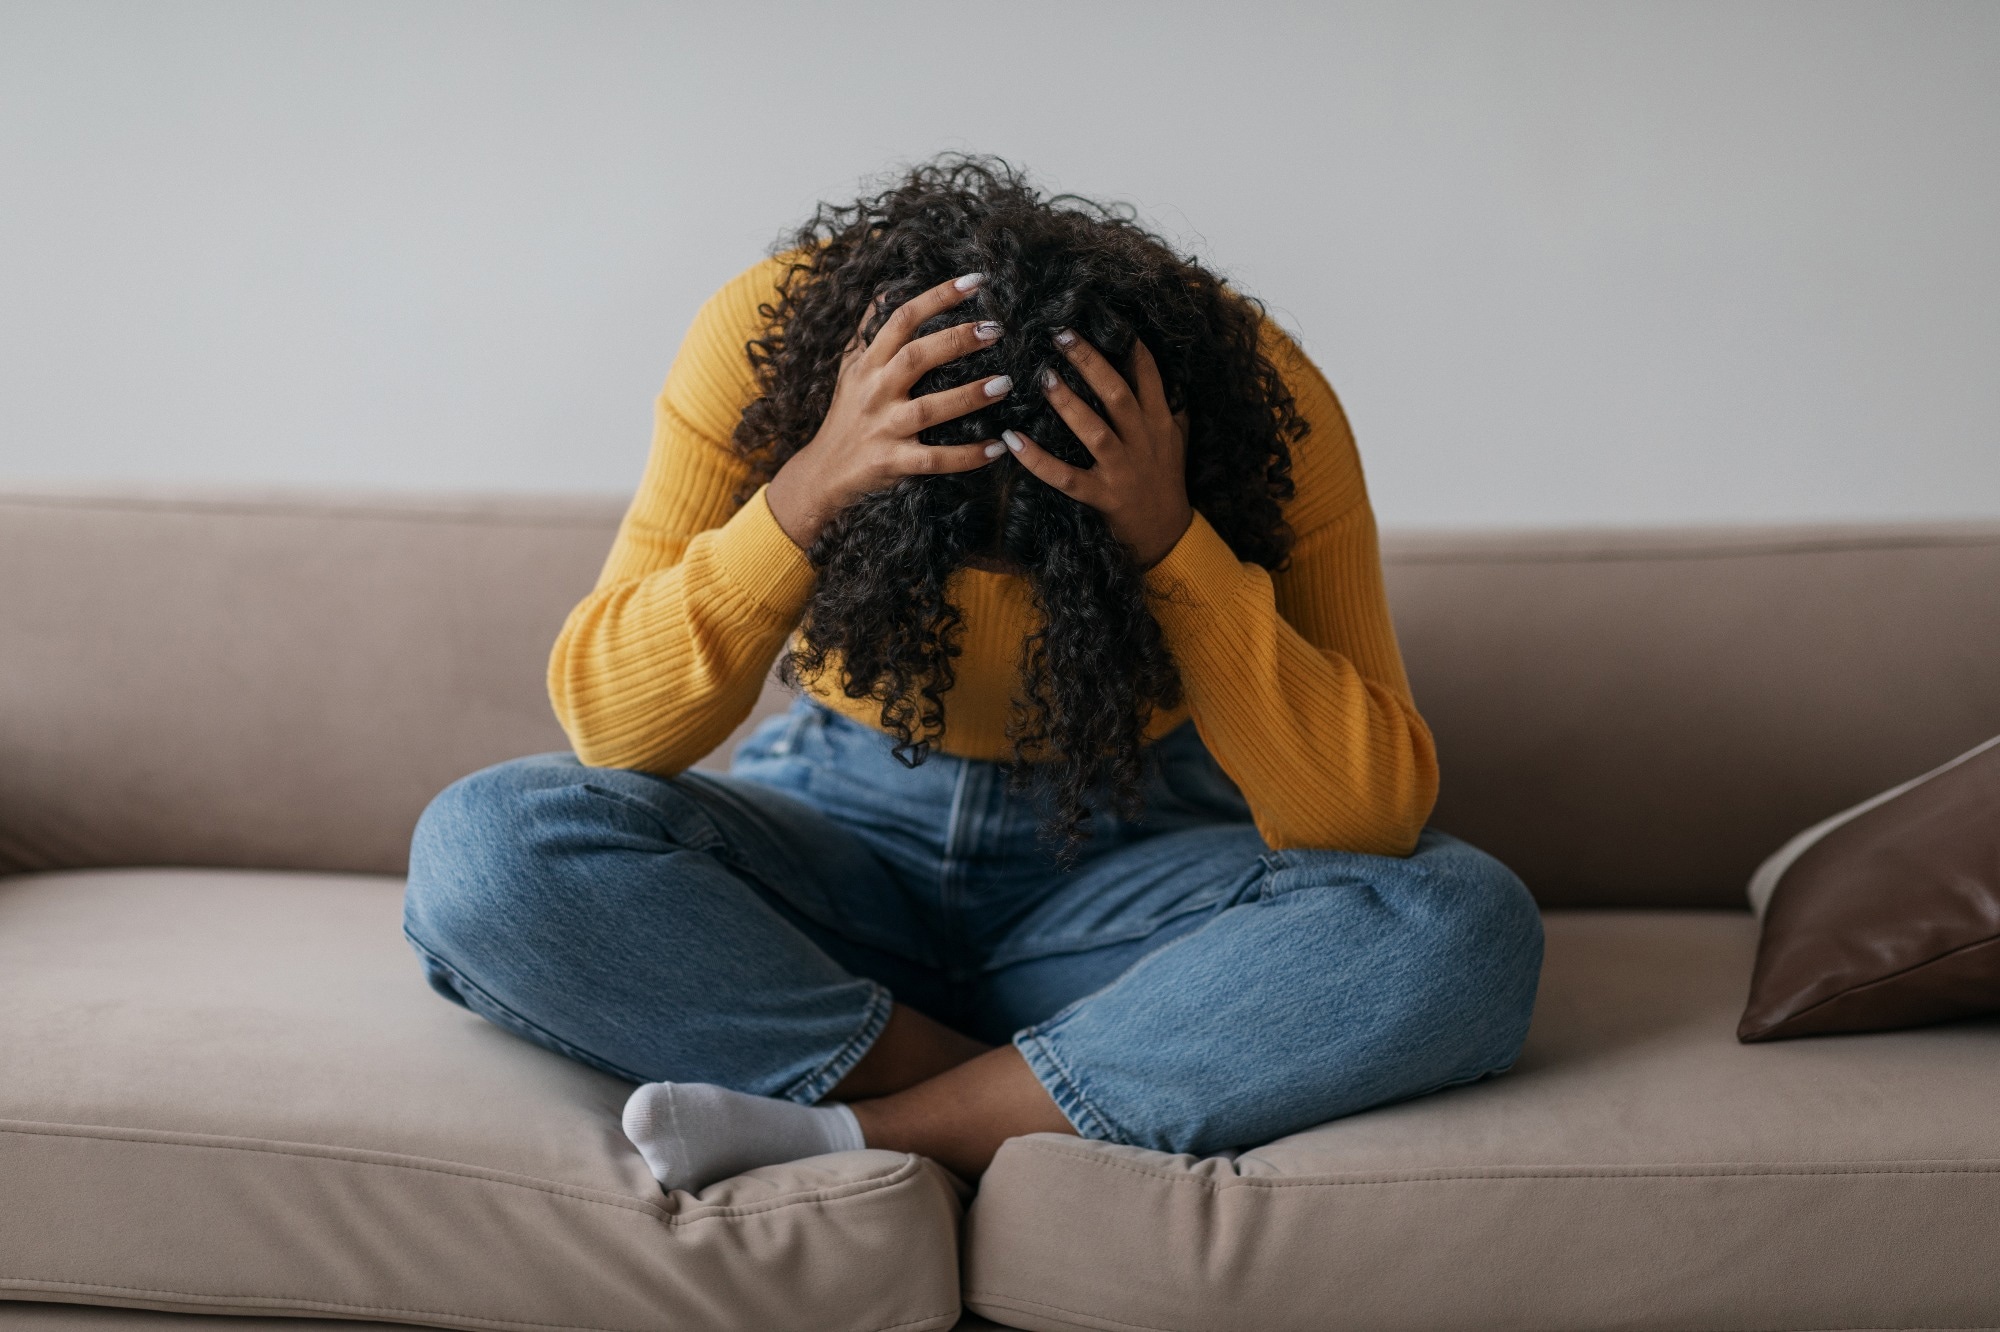 Study: Posttraumatic Stress Disorder Symptoms and Cardiovascular and Brain Health in Women. Image Credit: Prostock-studio/Shutterstock.com